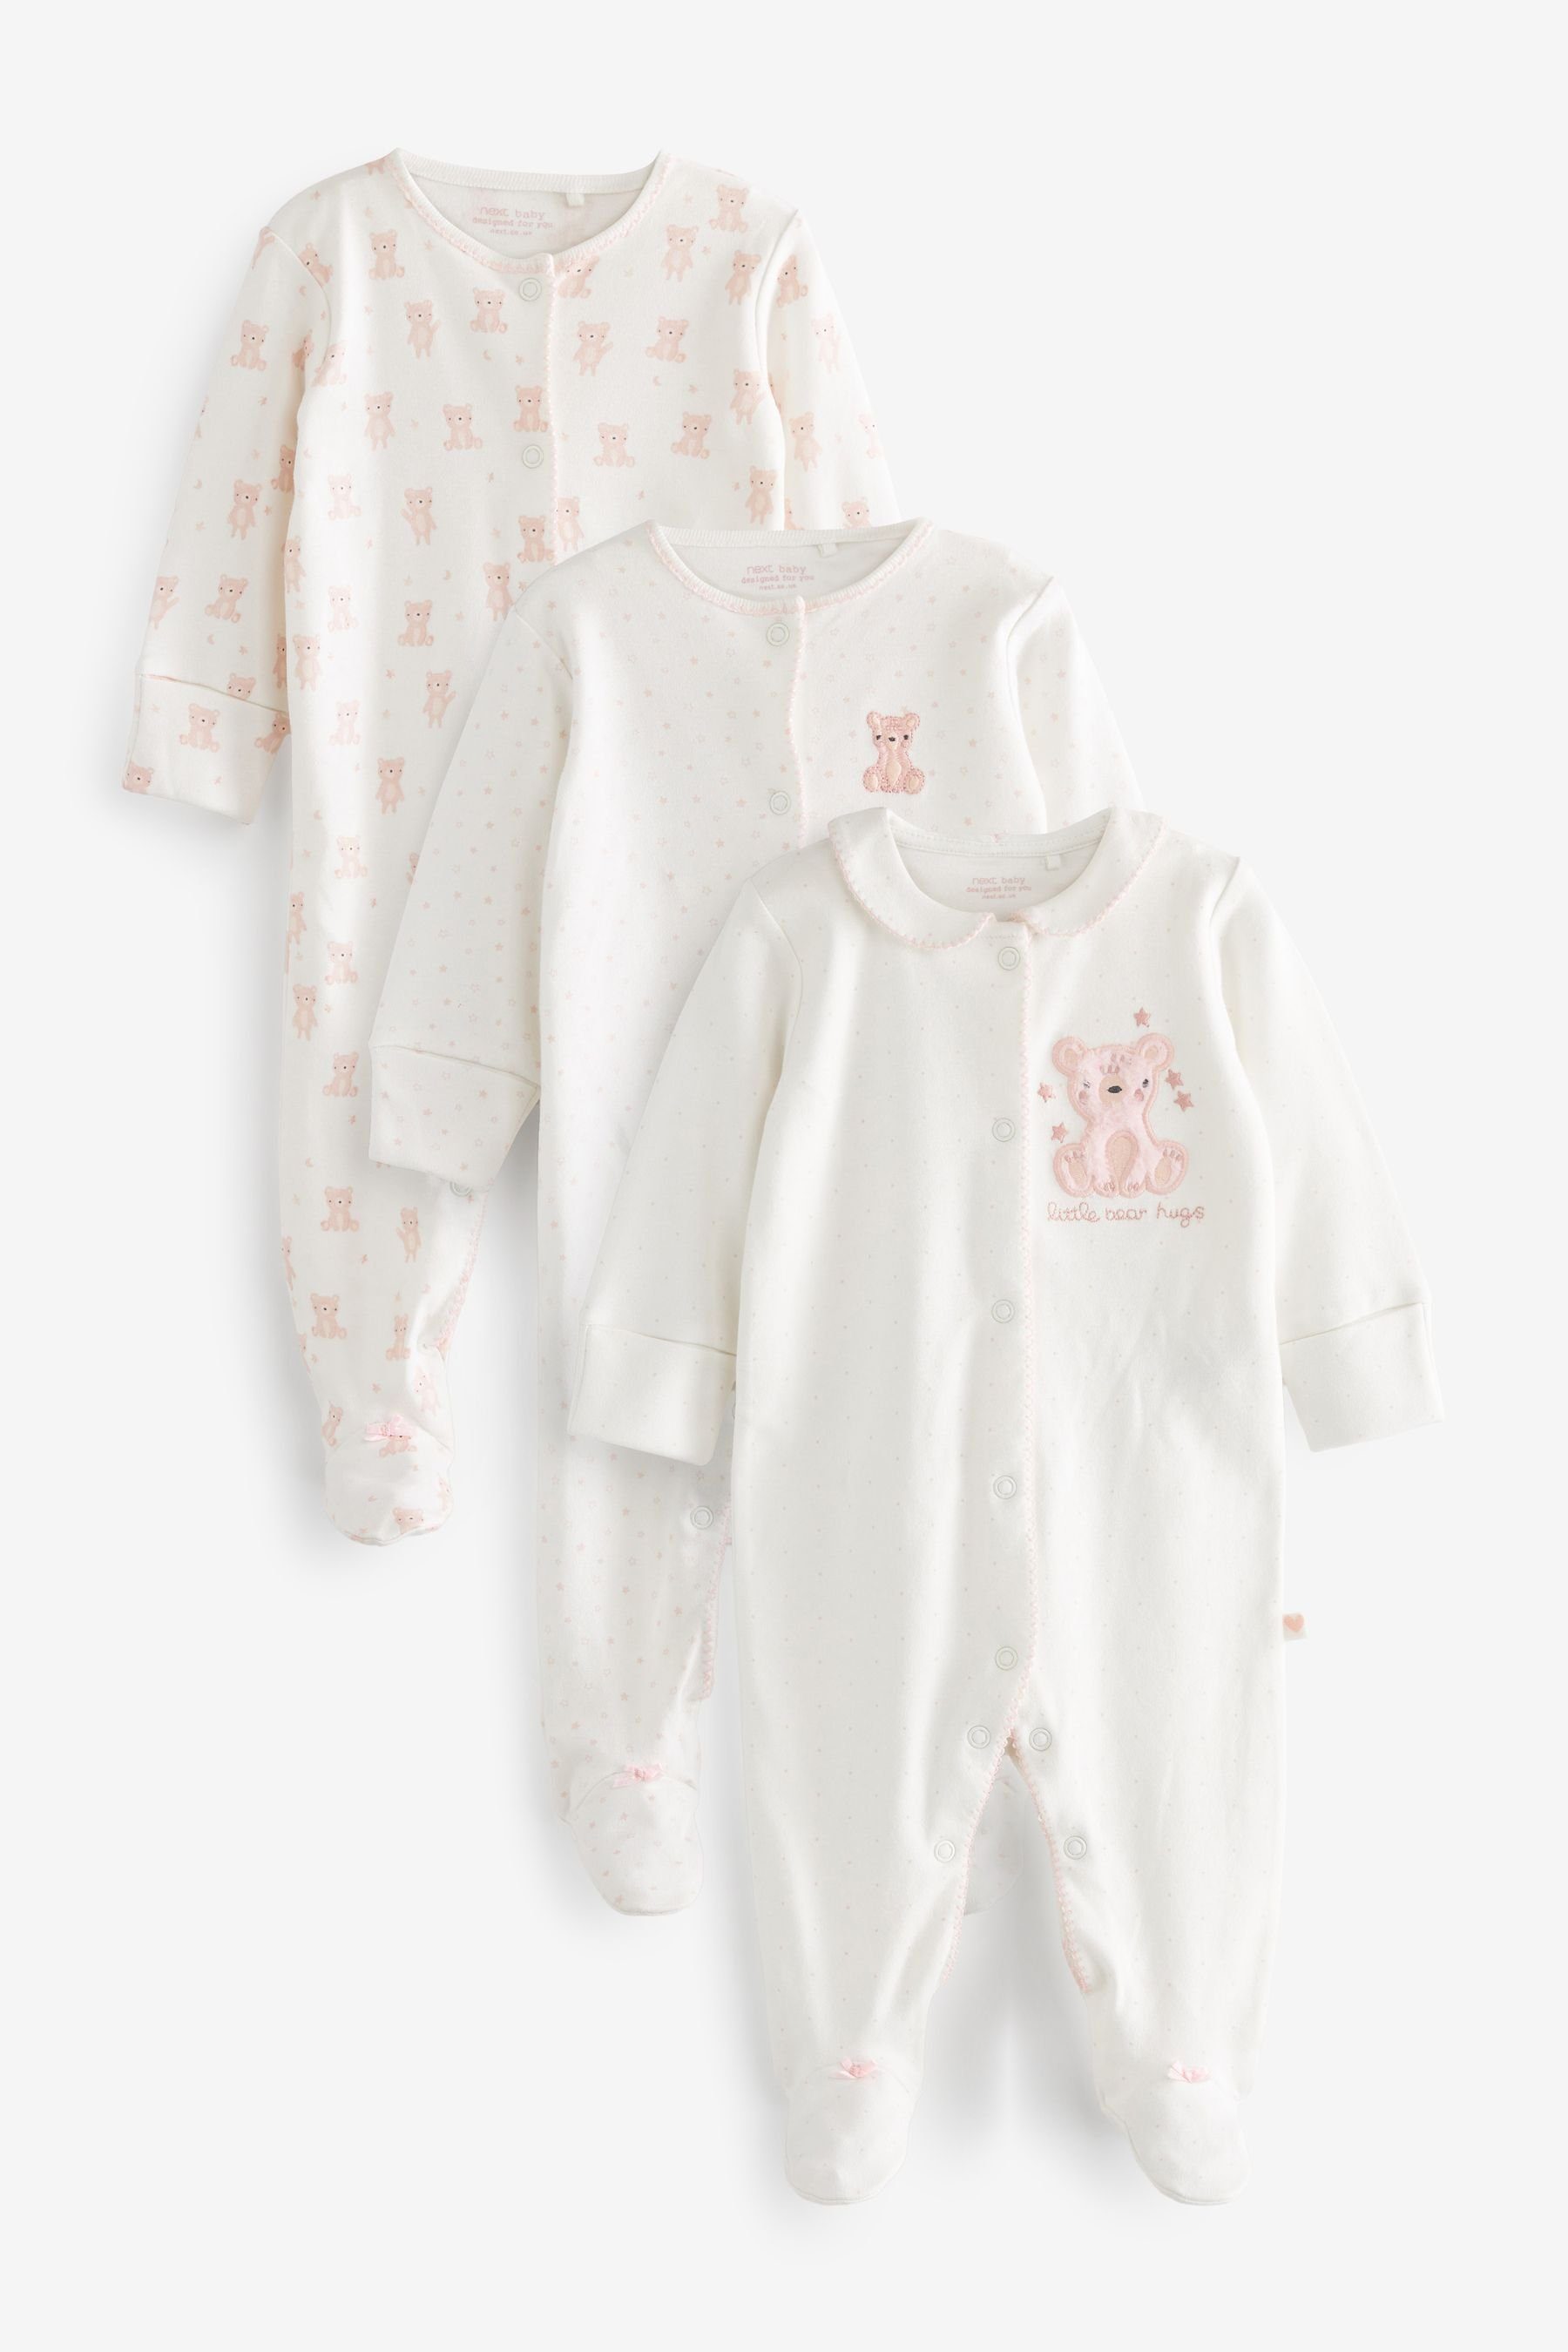 Next Schlafoverall Pyjamas, 3er-Pack Bear (3-tlg) White/Pink